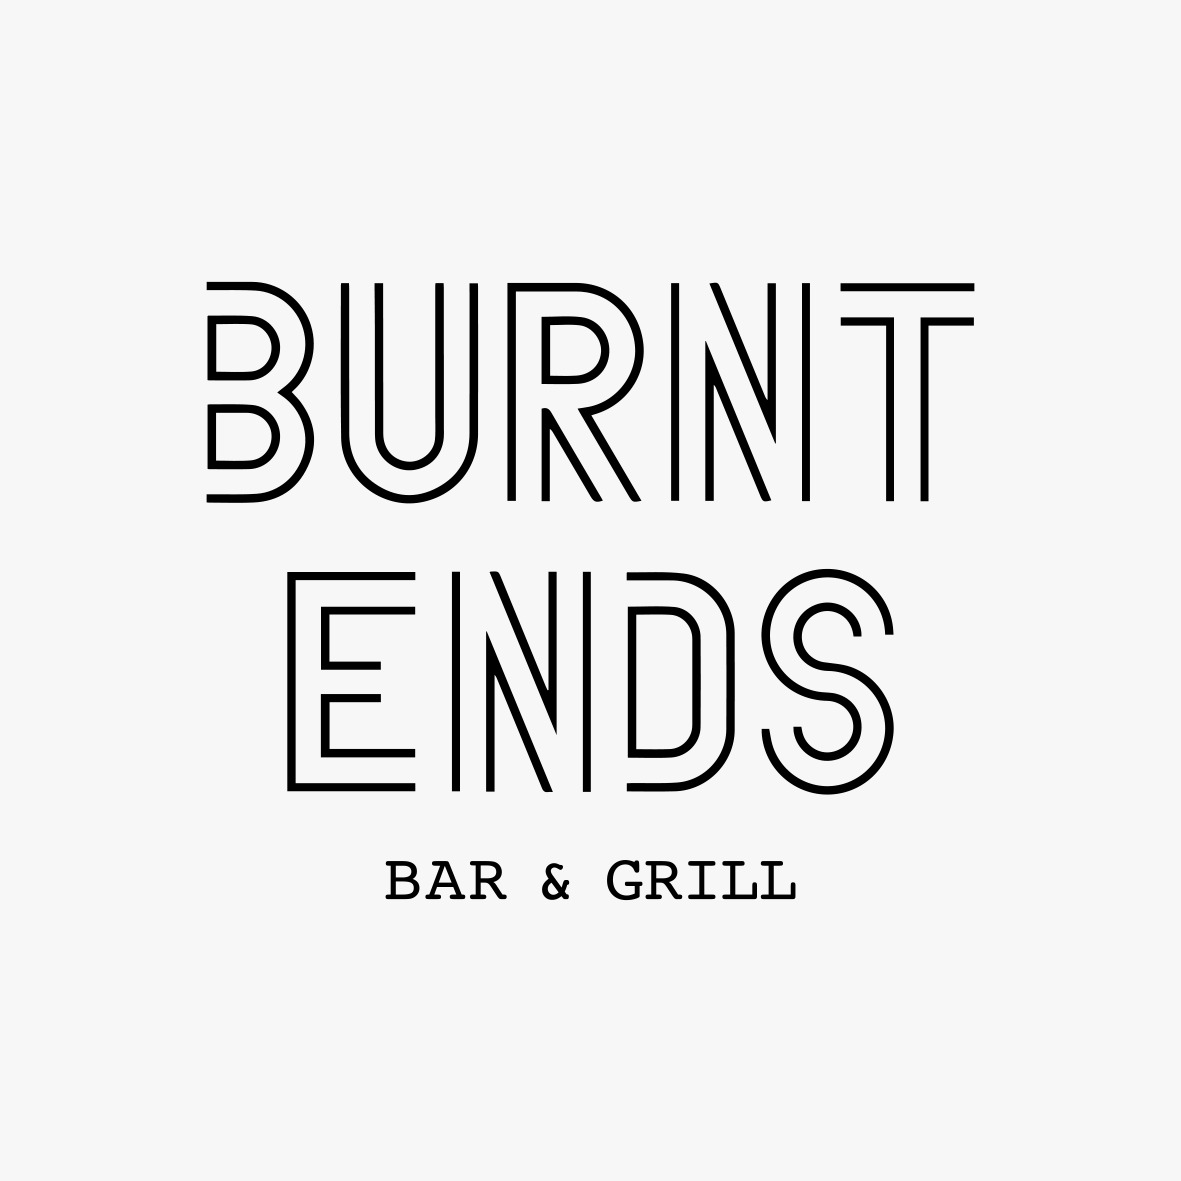 Burnt Ends Restaurant Pte. Ltd. company logo